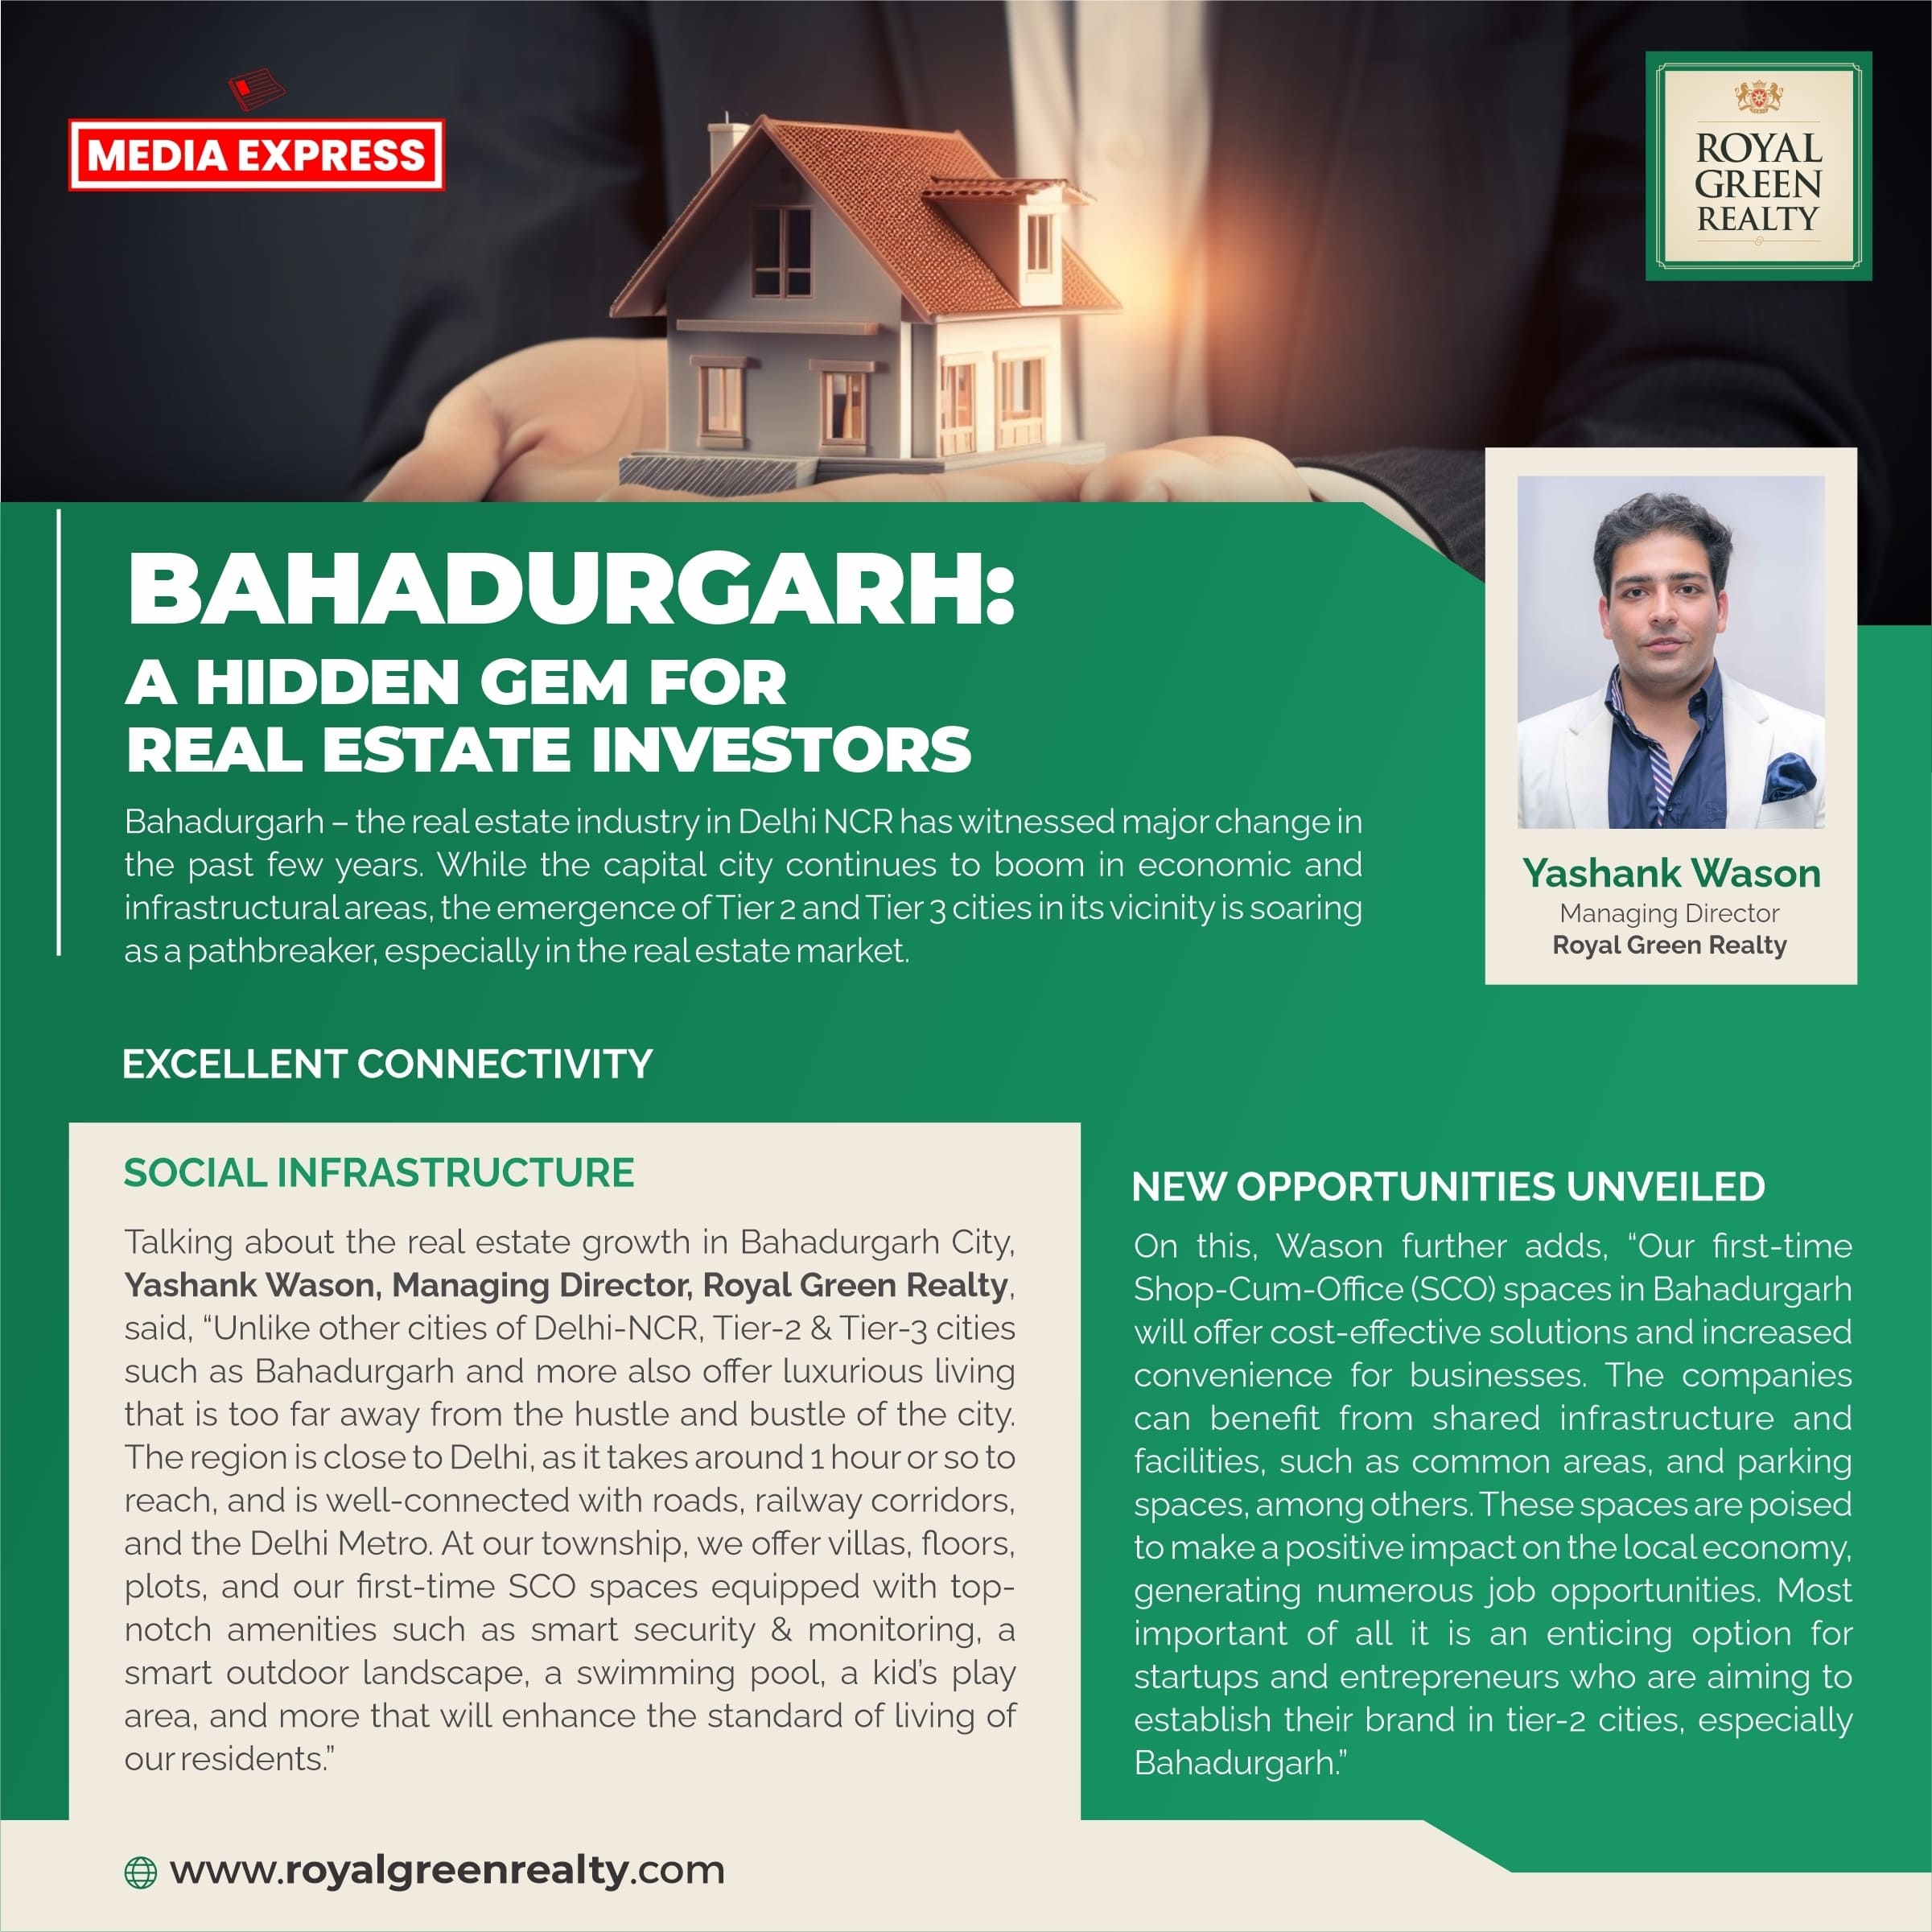 Bahadurgarh: A hidden gem for real estate investors.